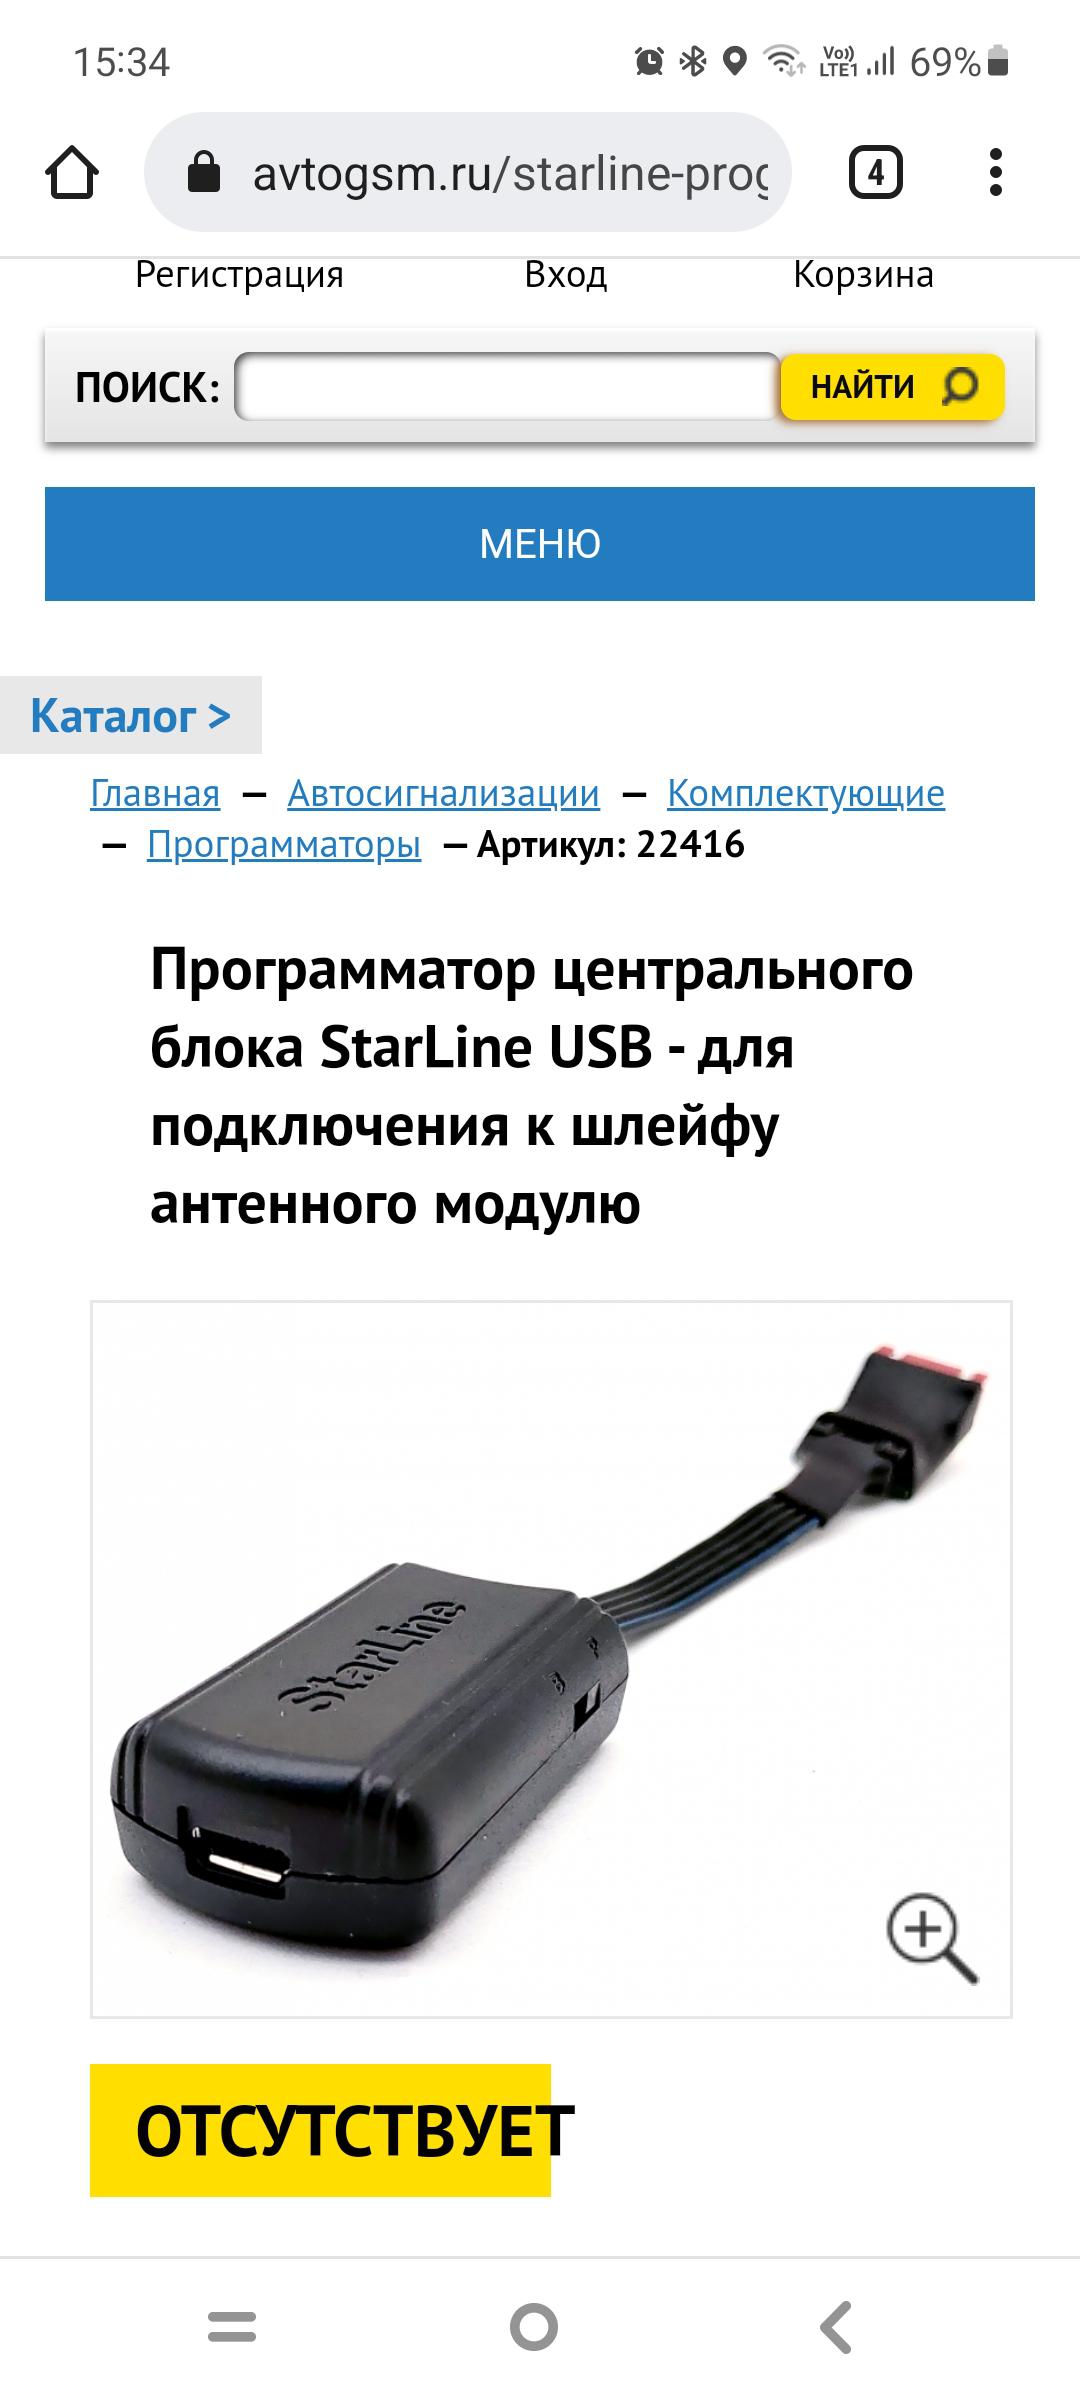 Программатор центрального блока StarLine USB v3 - для подключения к шлейфу антенного модулю